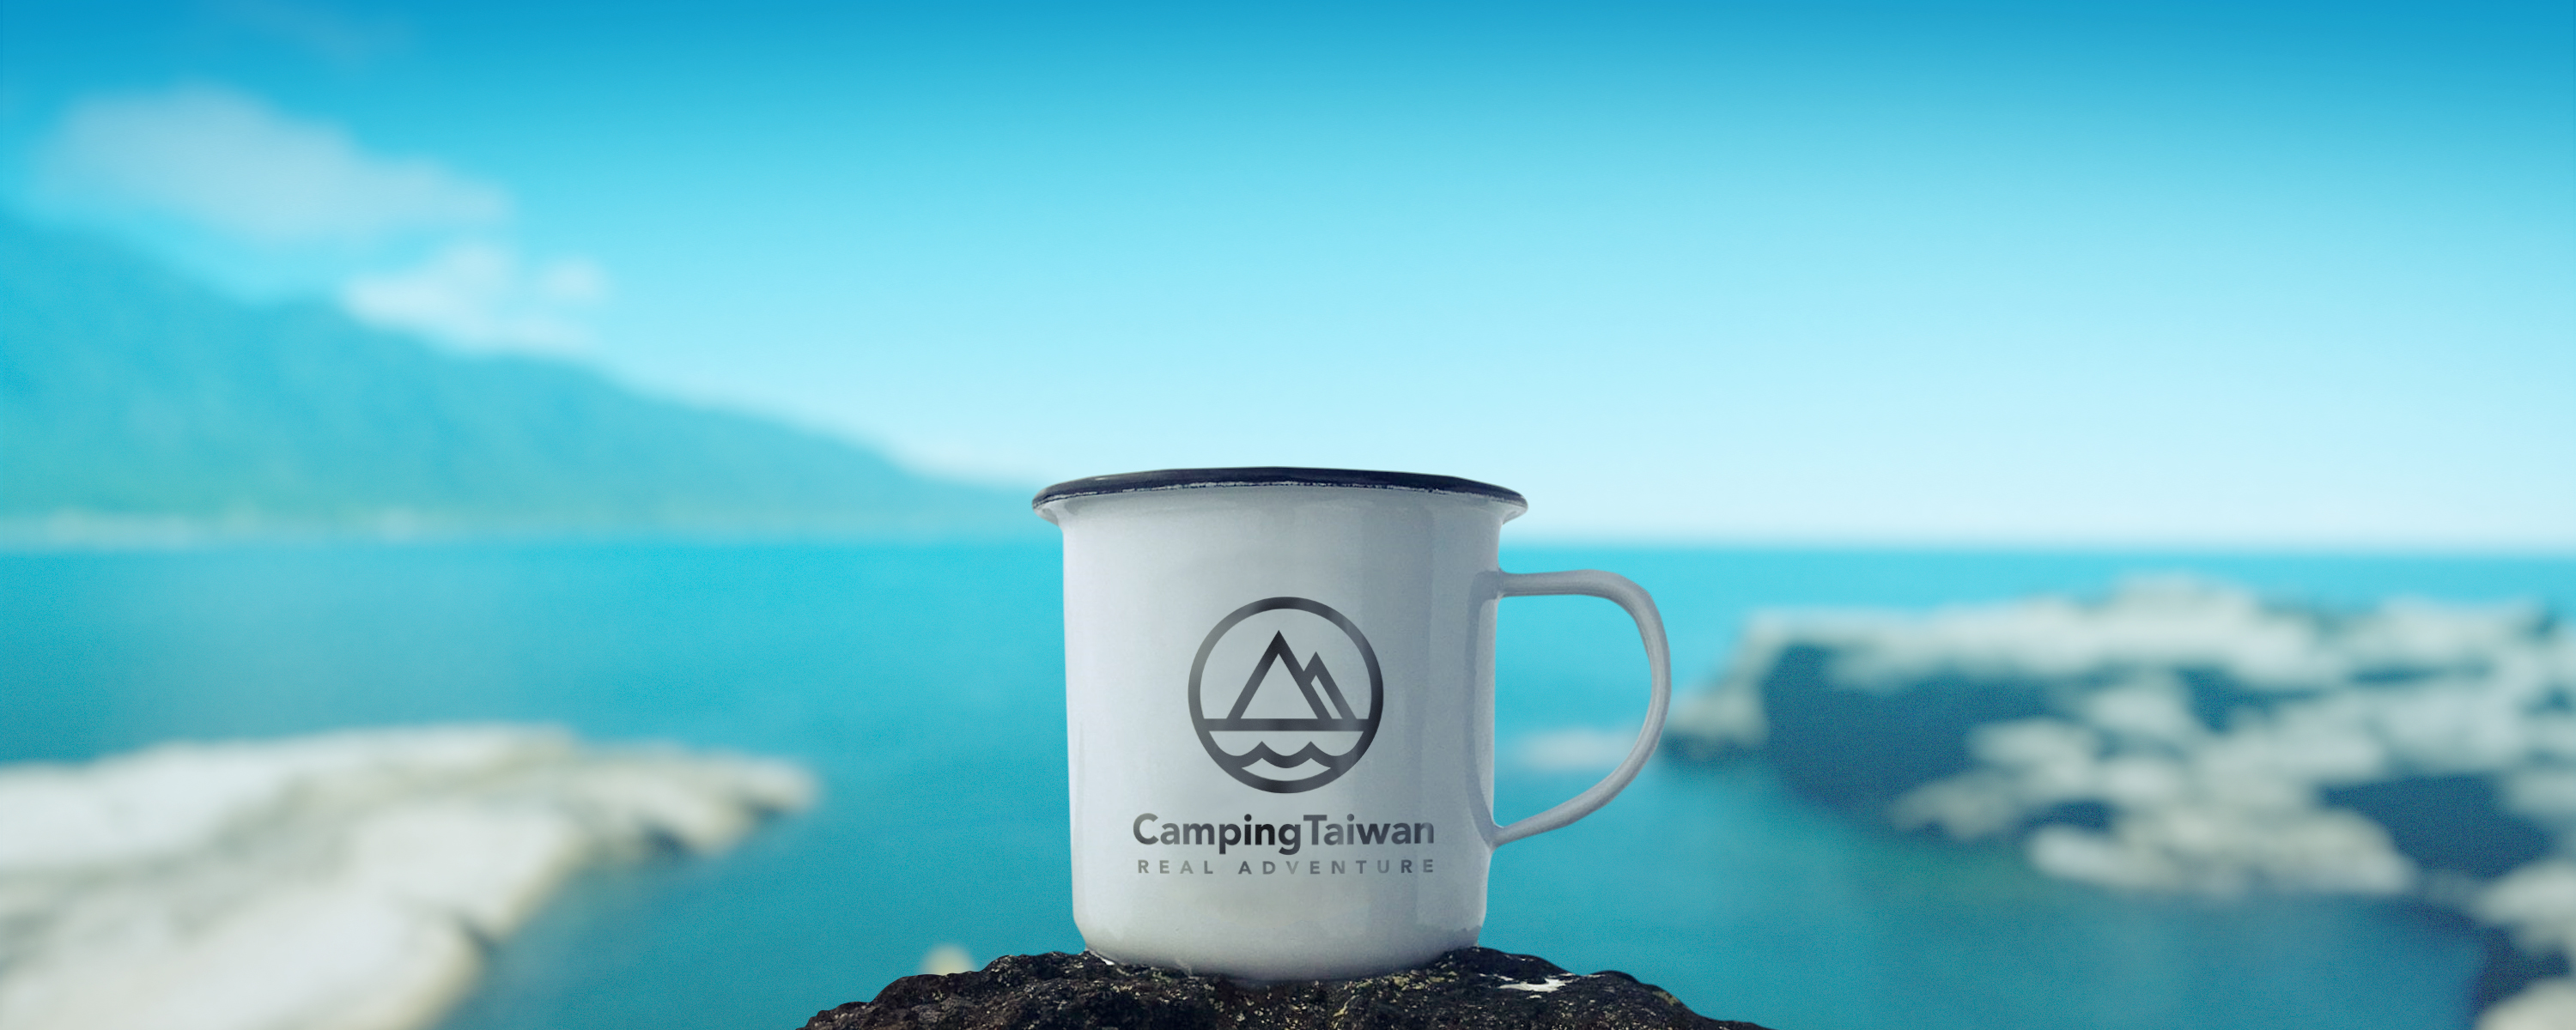 CampingTaiwan Logo Printed on Enamel Mug